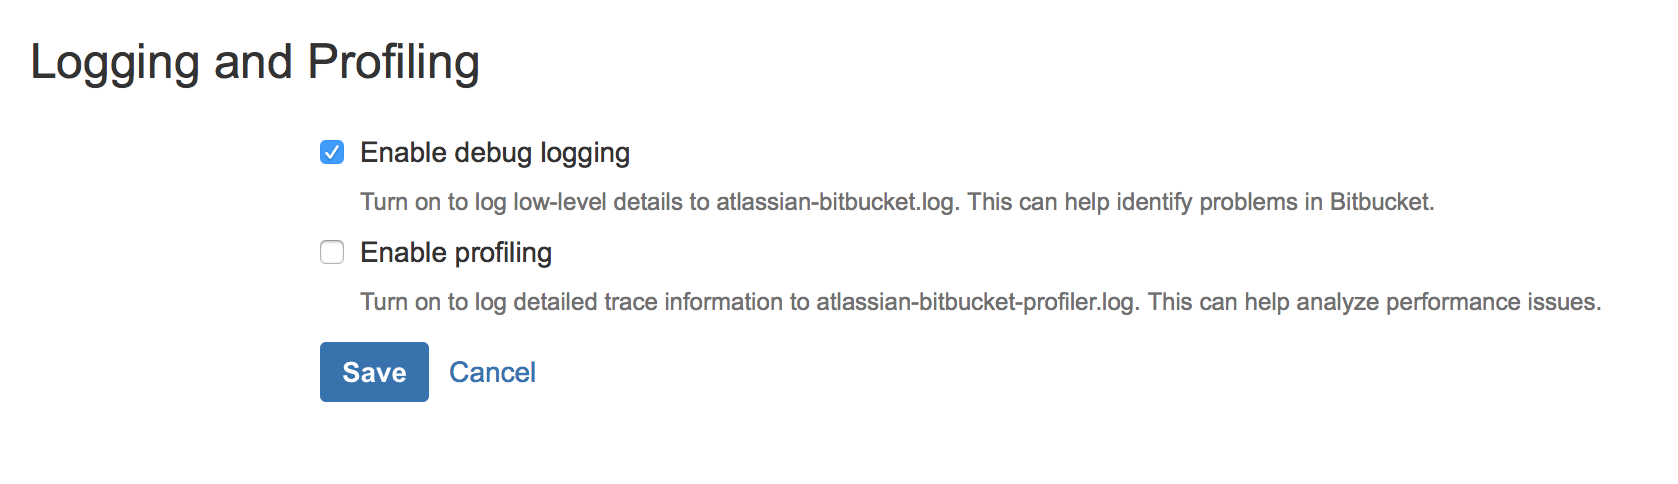 enable_Bitbucket logging and profiling